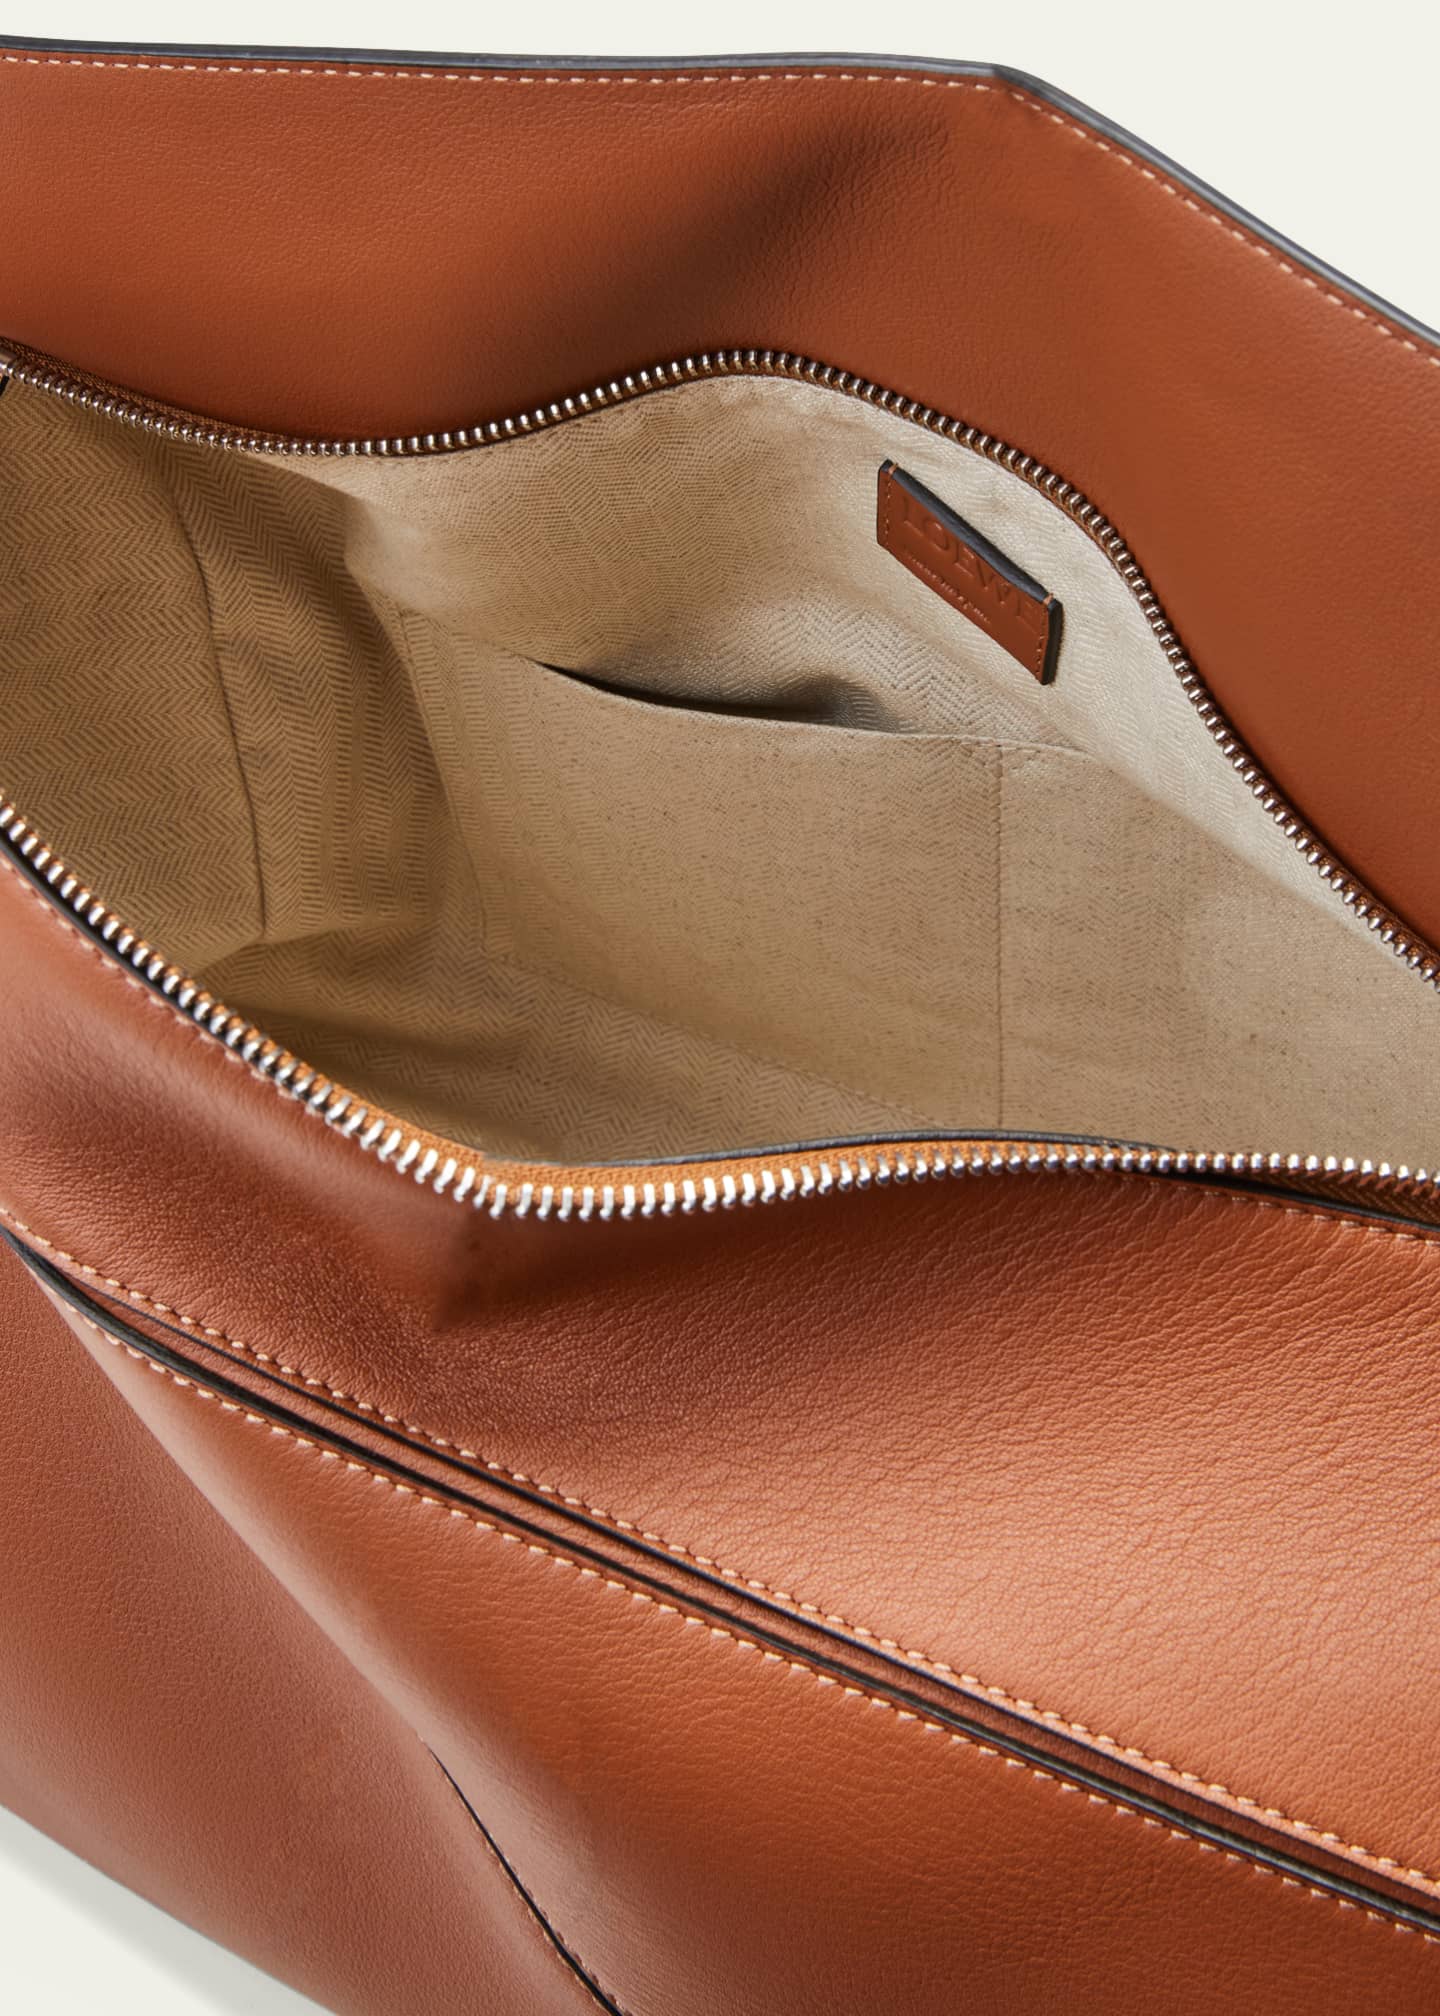 Loewe Puzzle Large Leather Shoulder Bag for Women